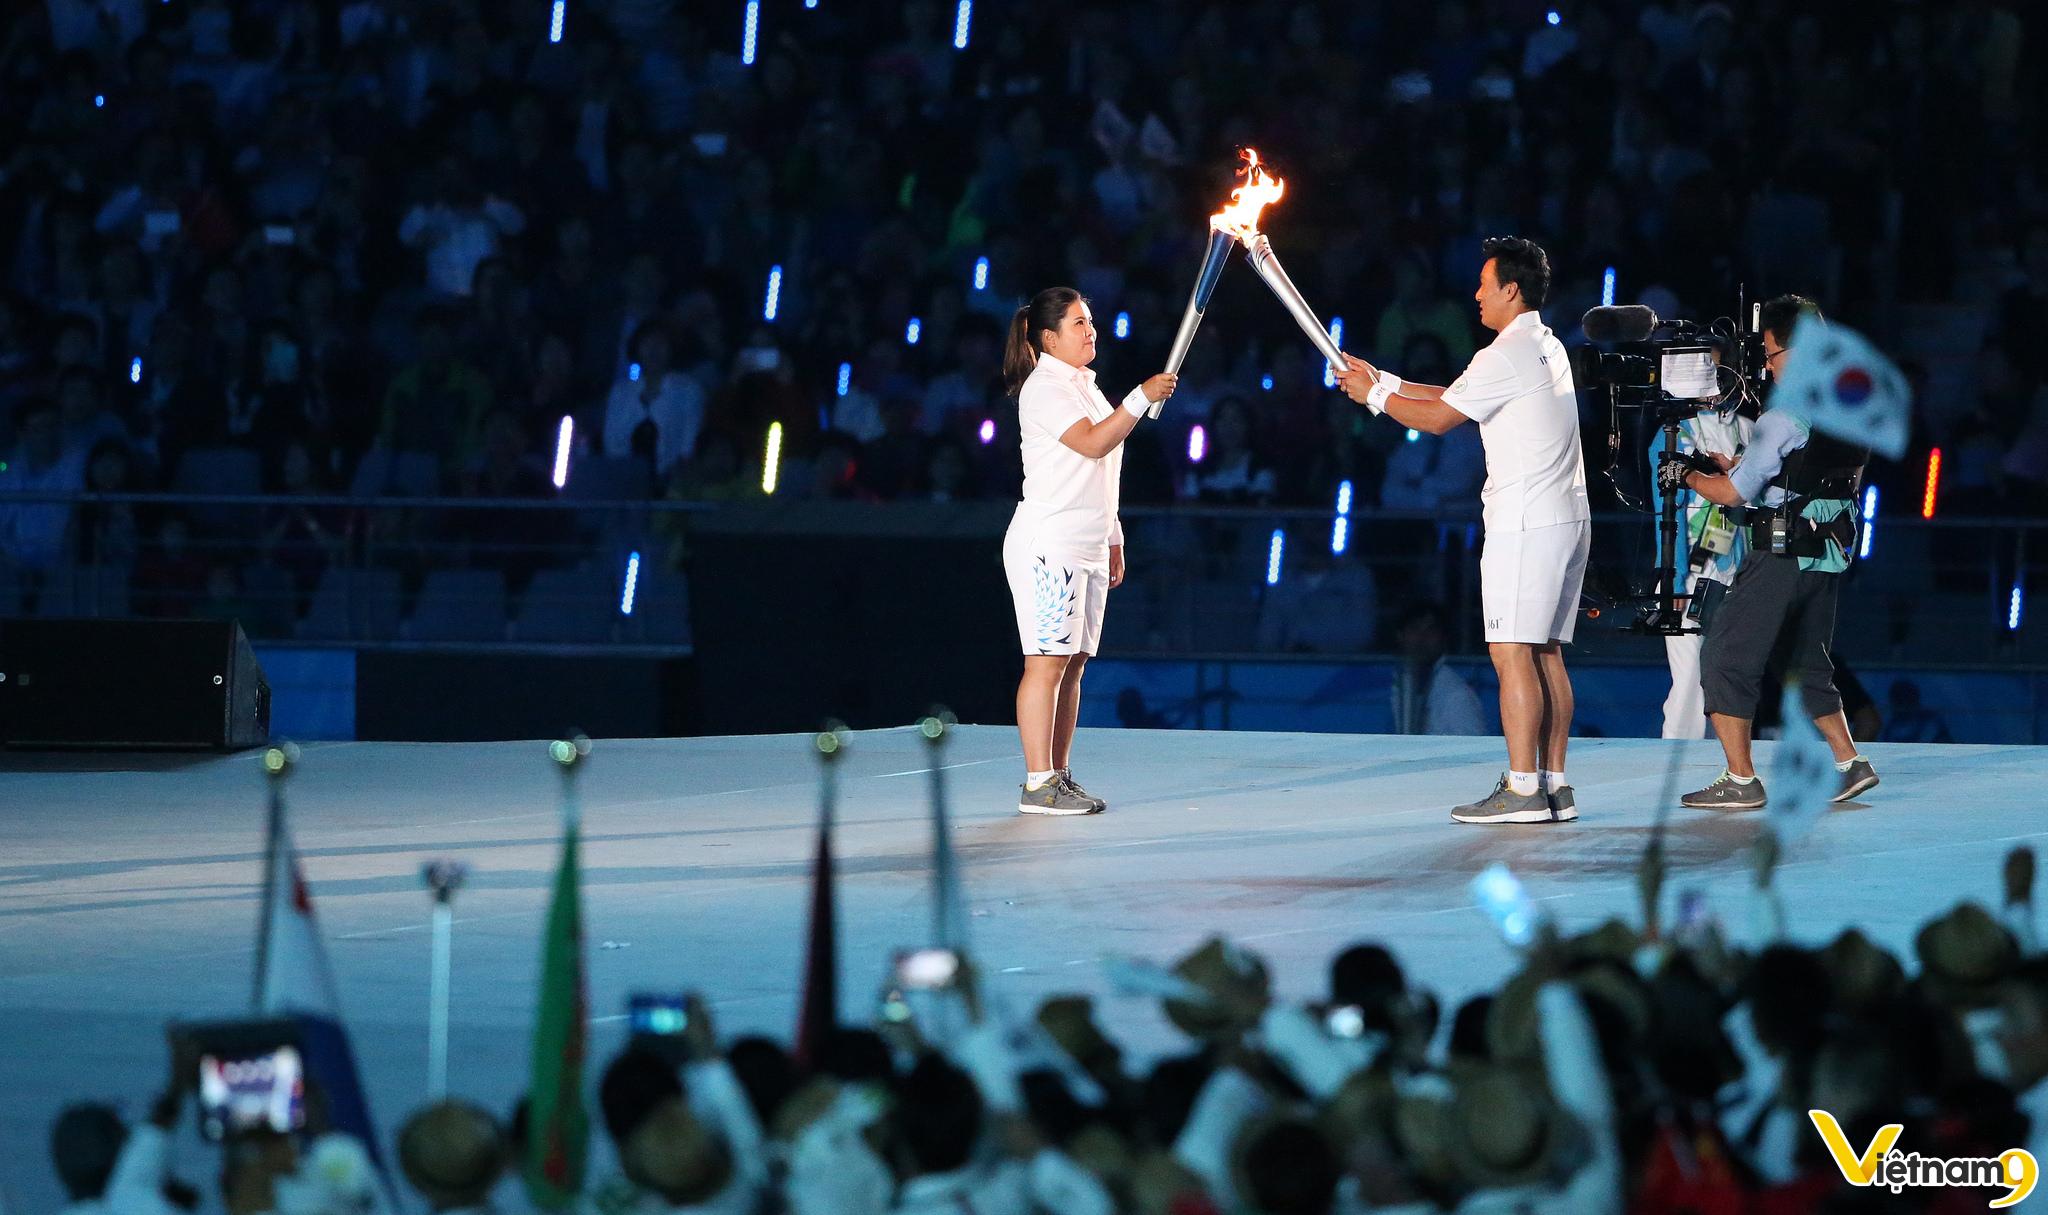 Asian Games 2014 - Vietnam9.net - Torchlight scene of the 2014 Asian Games